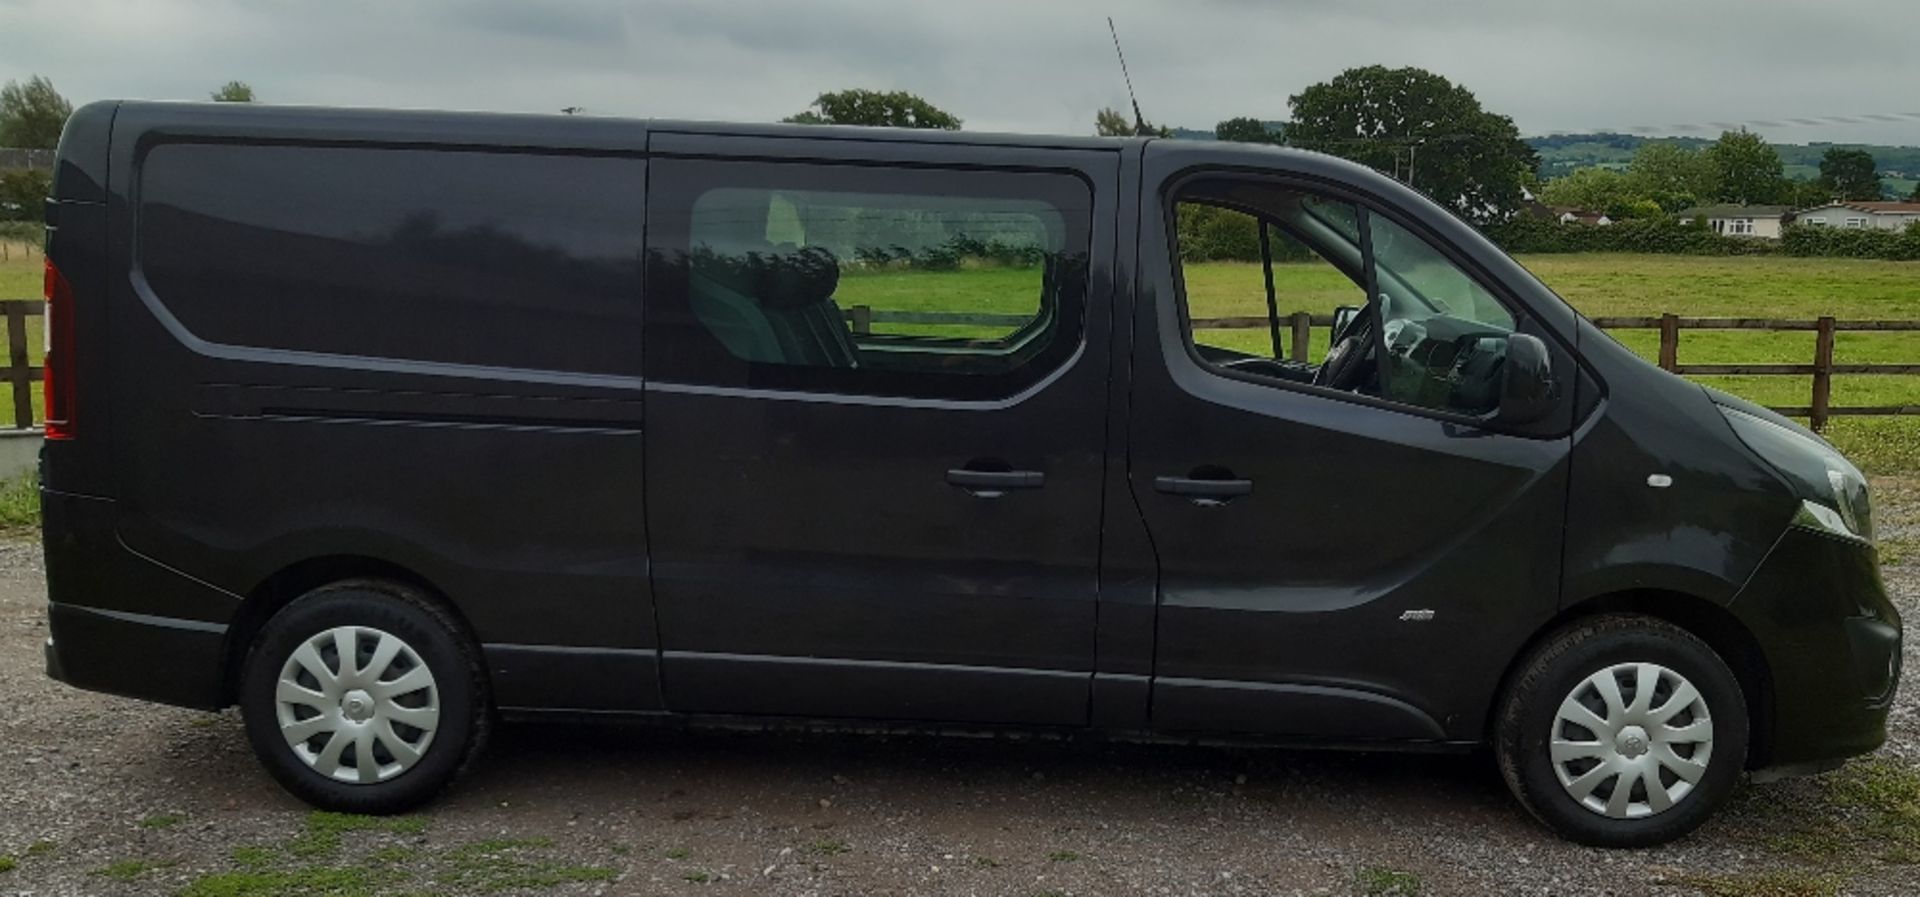 Vauxhall Vivaro CrewCab 2-axle rigid body van - Image 2 of 8